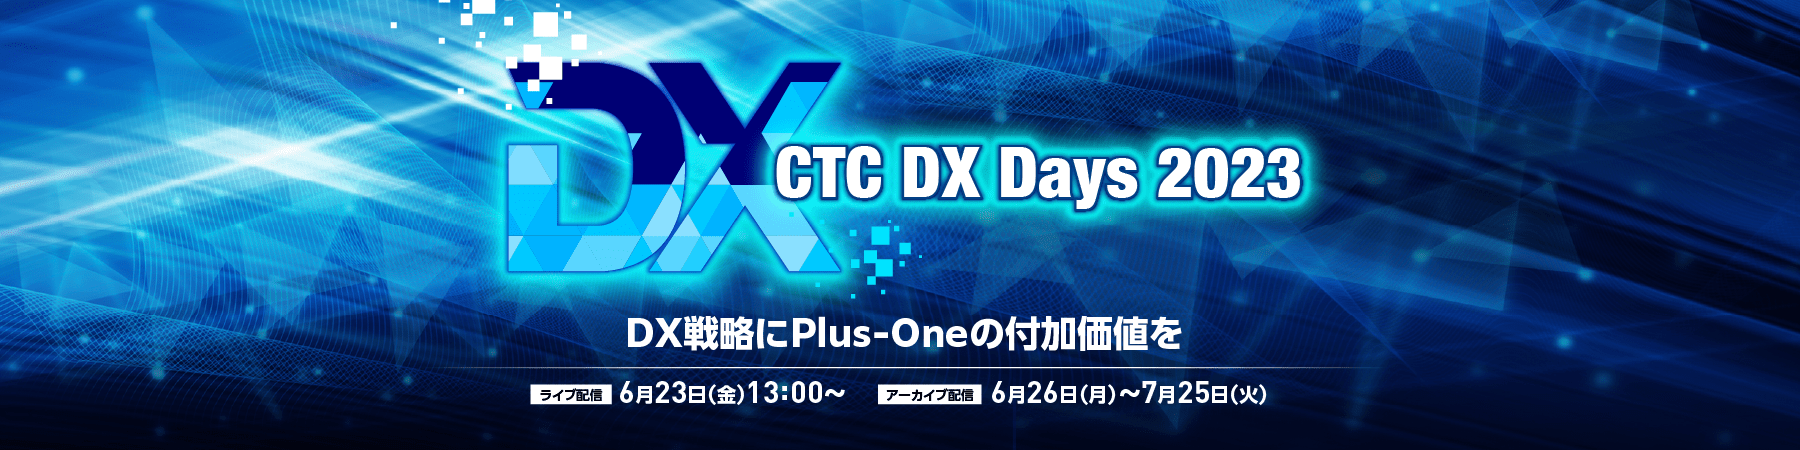 CTC DX Days 2023 DX戦略にPlus-Oneの付加価値を